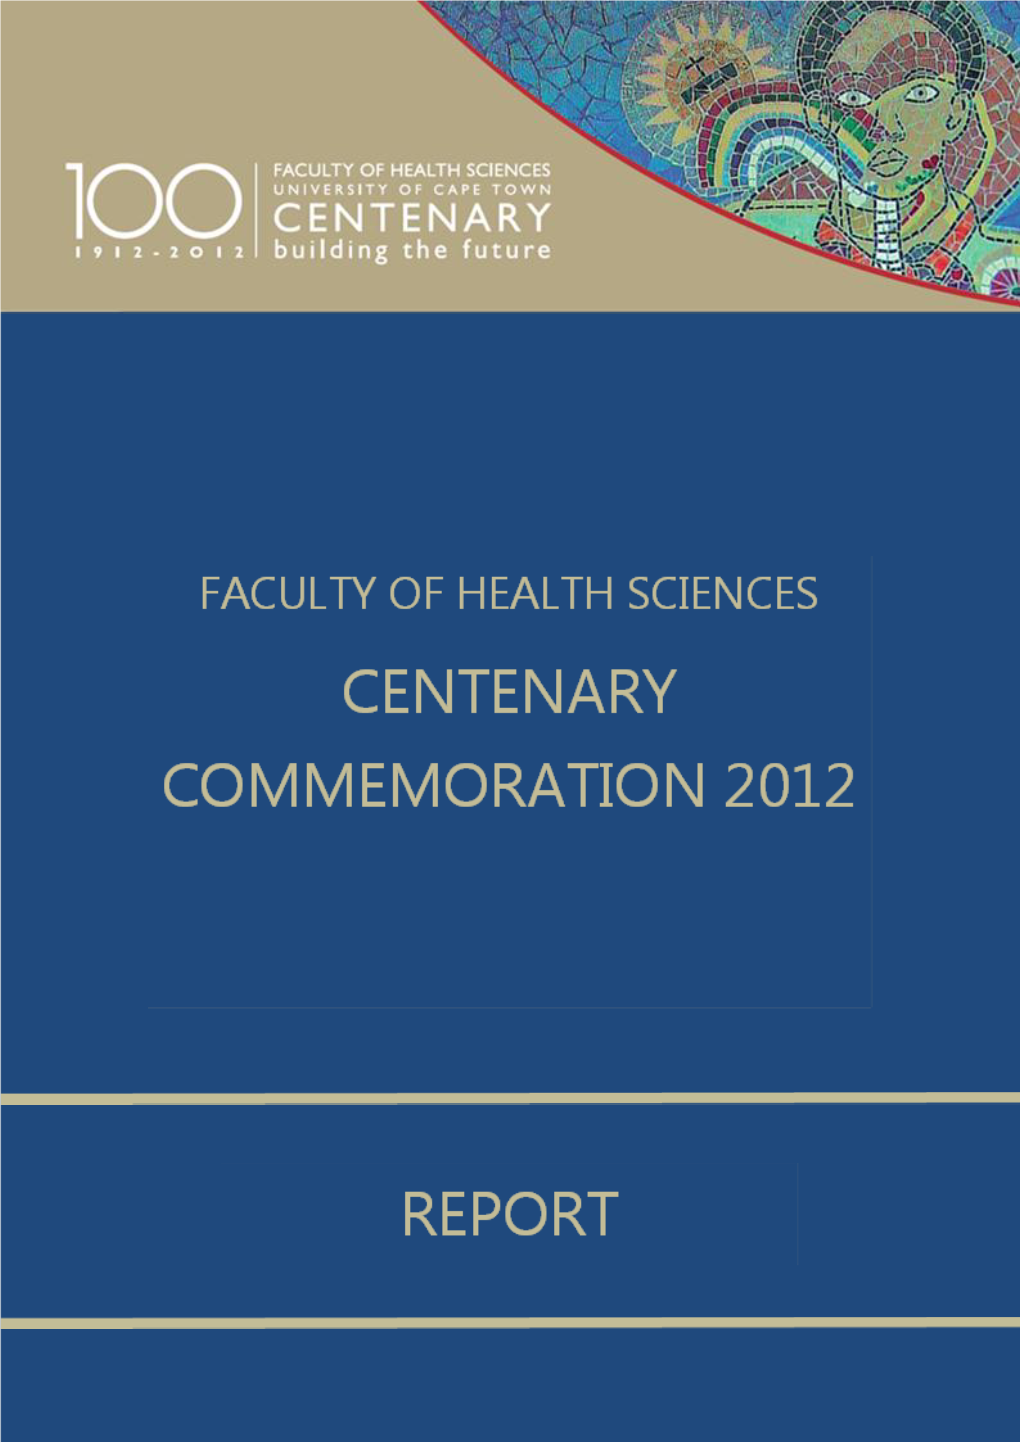 FHS Centenary Commemoration Report.Pdf